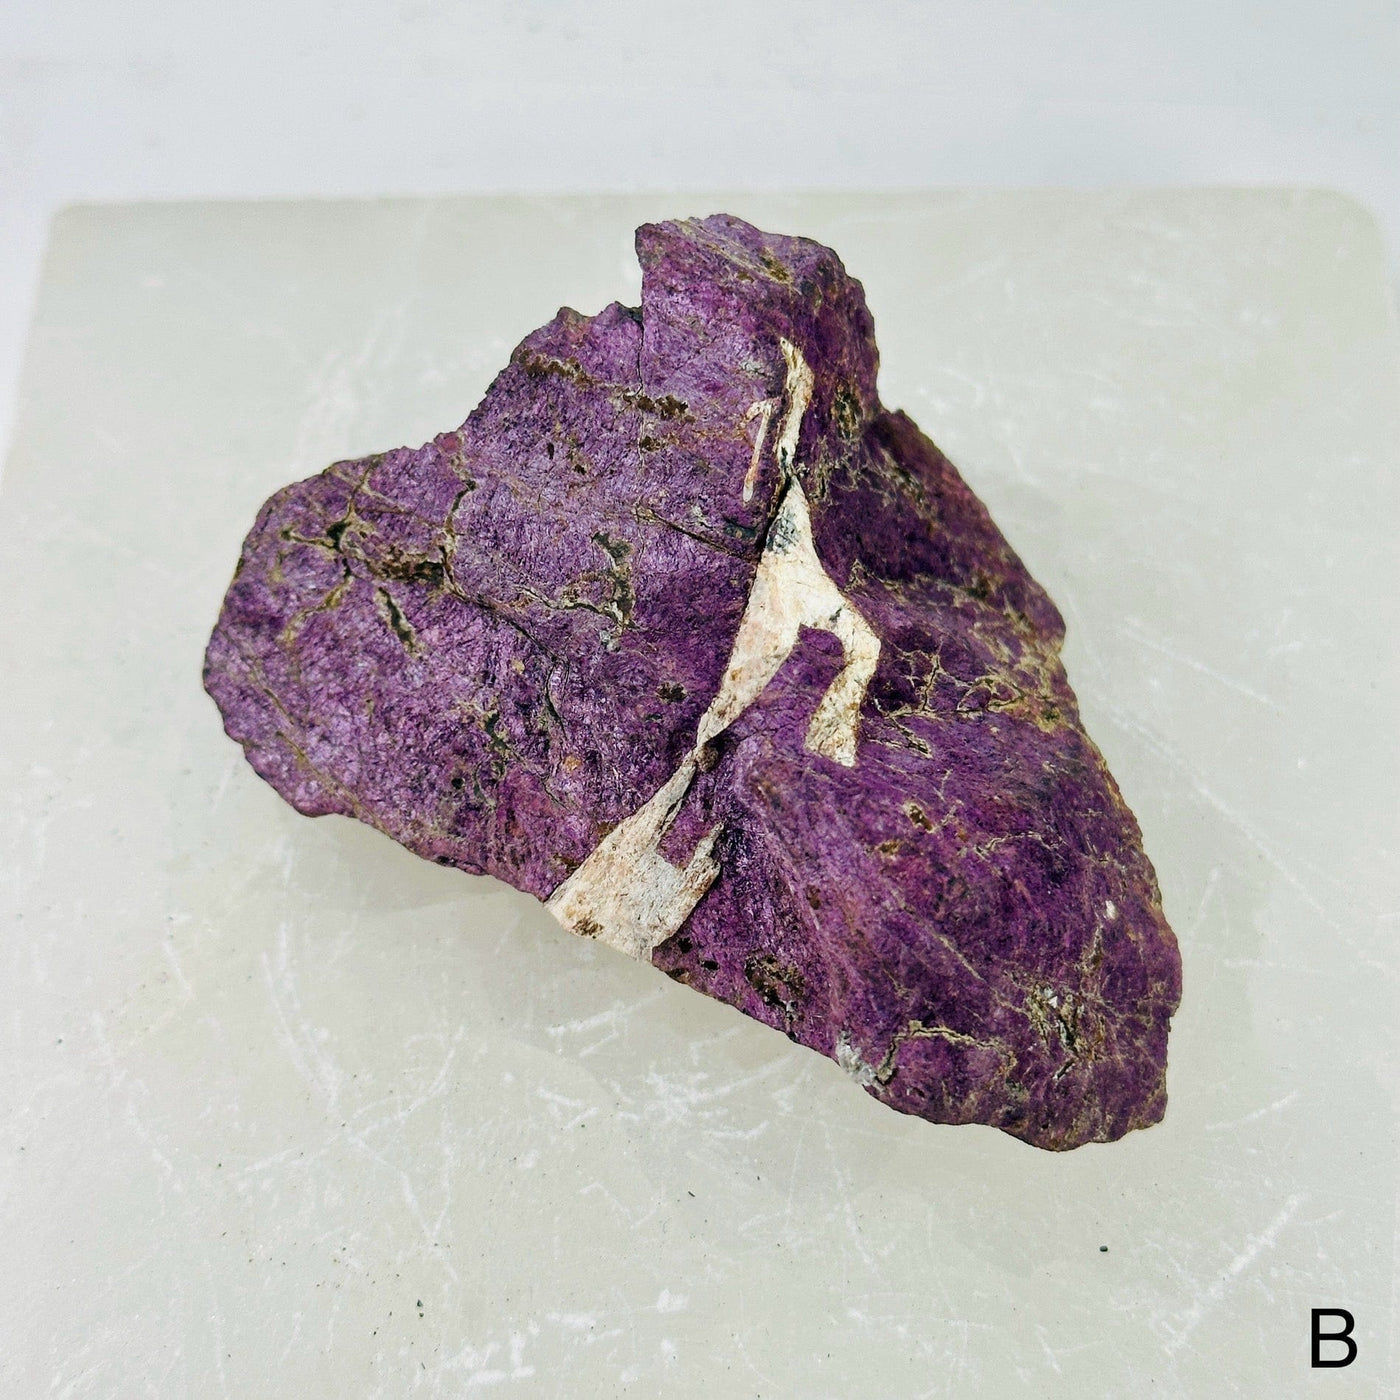  Purpurite Crystal - Natural Rough Stone - OOAK - YOU CHOOSE variant B labeled